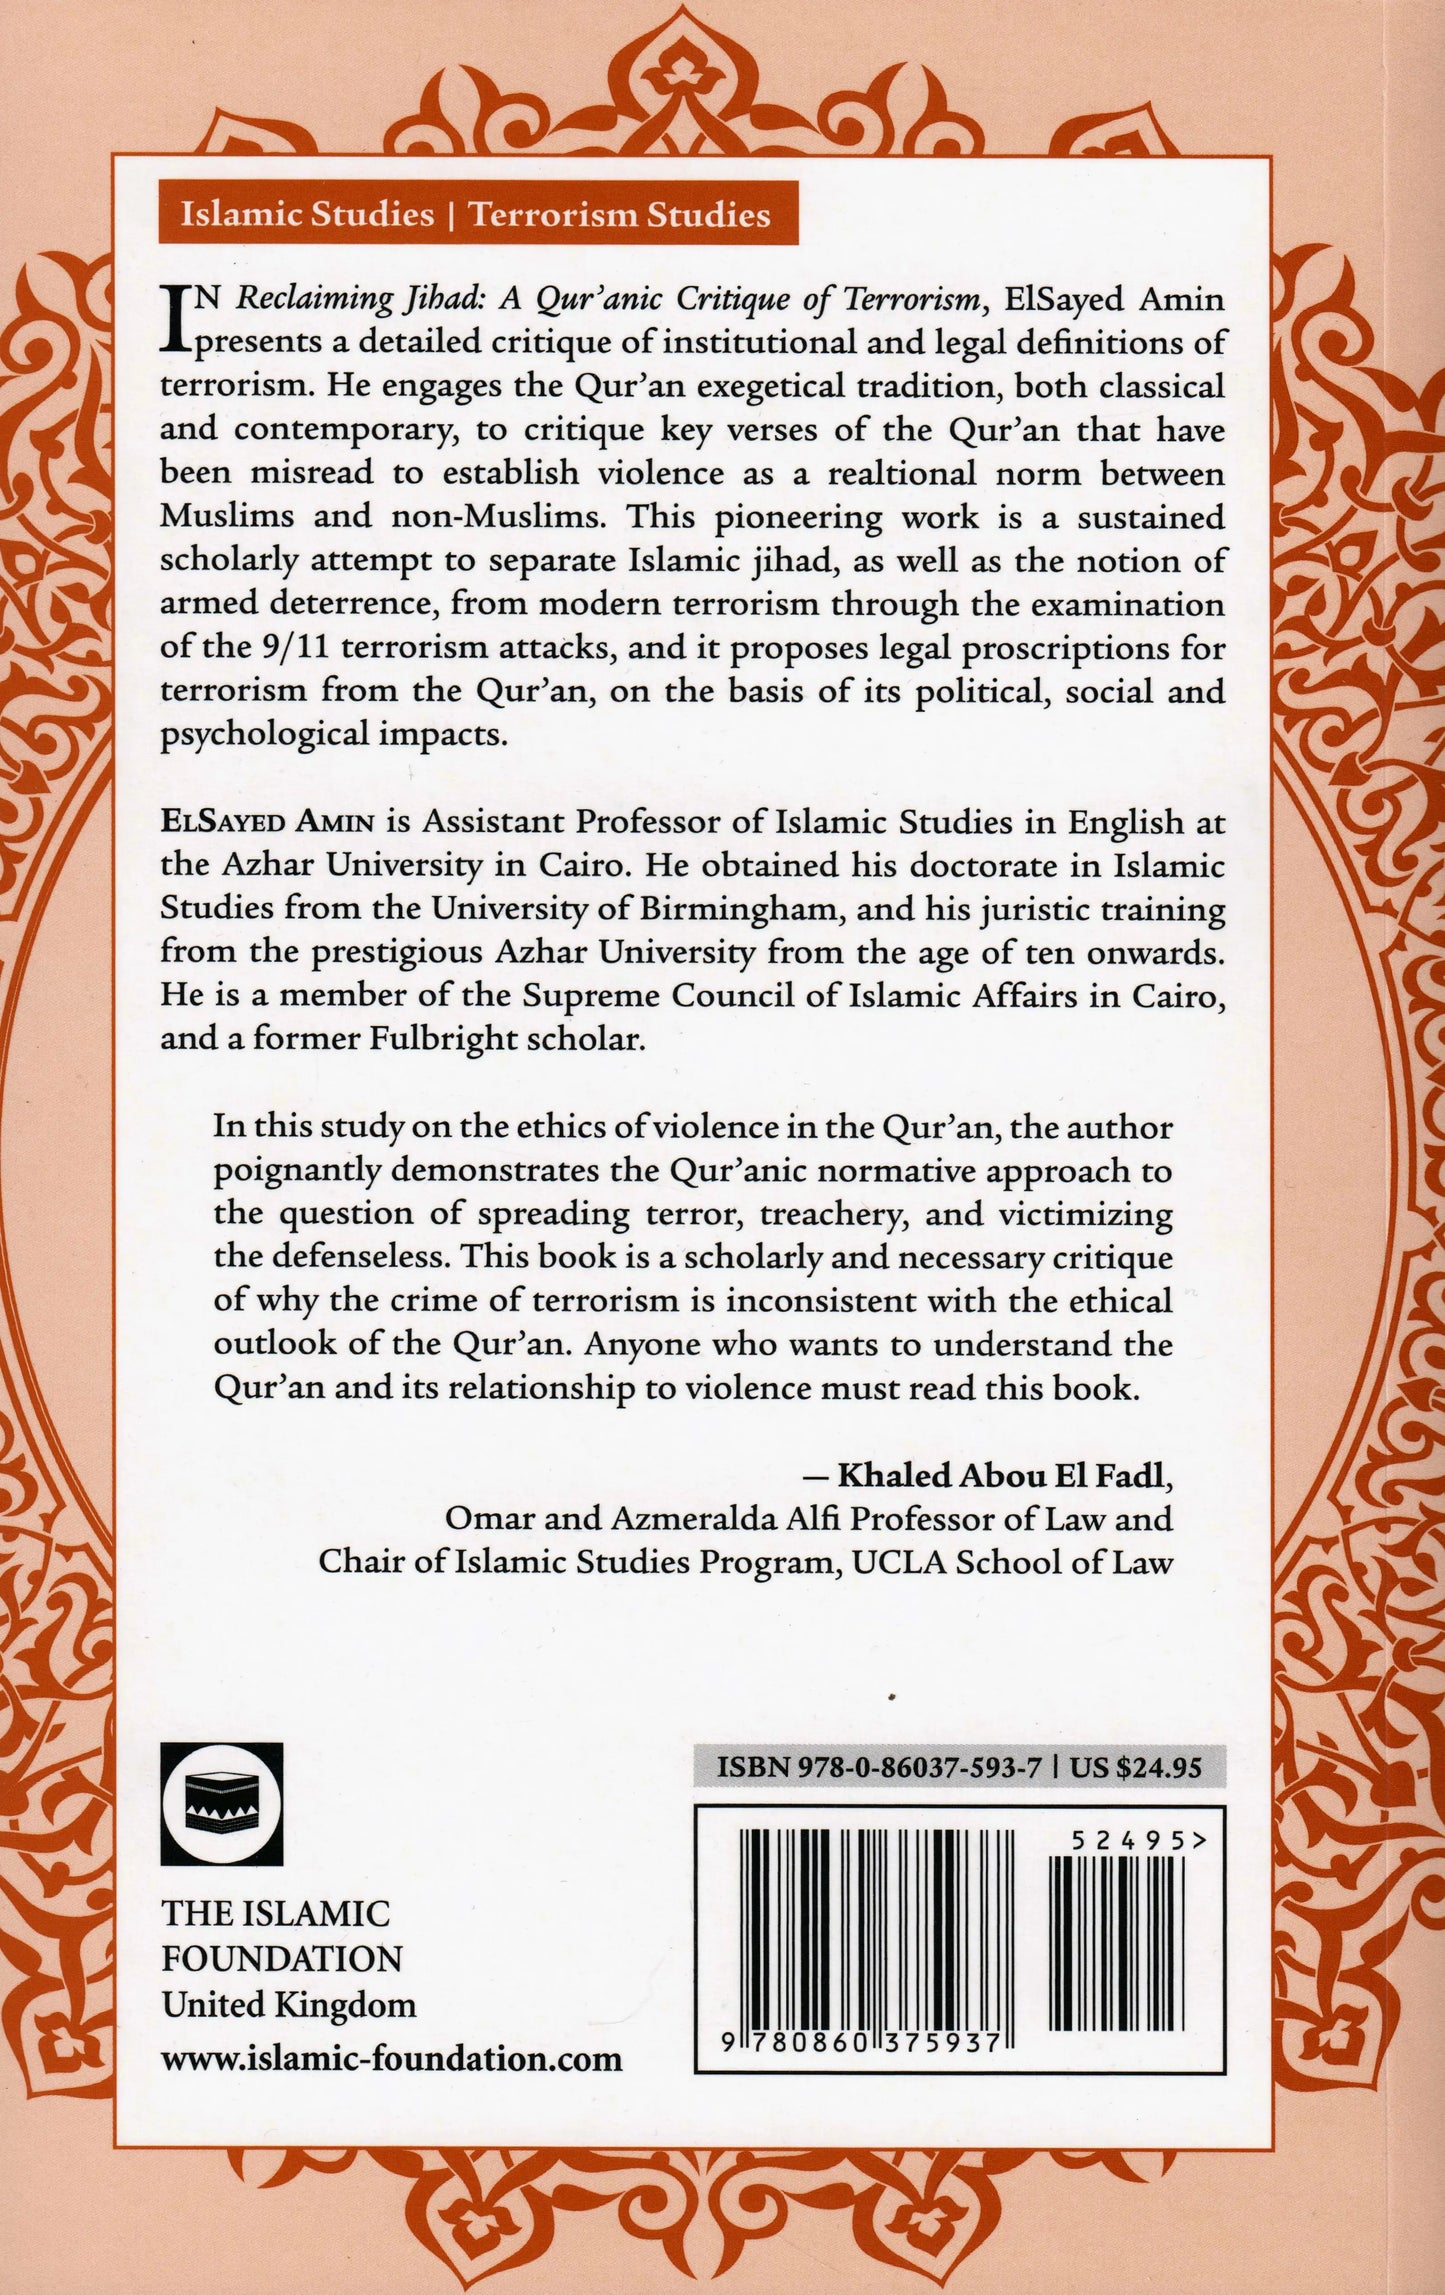 Reclaiming Jihad: A Qur’anic Critique of Terrorism